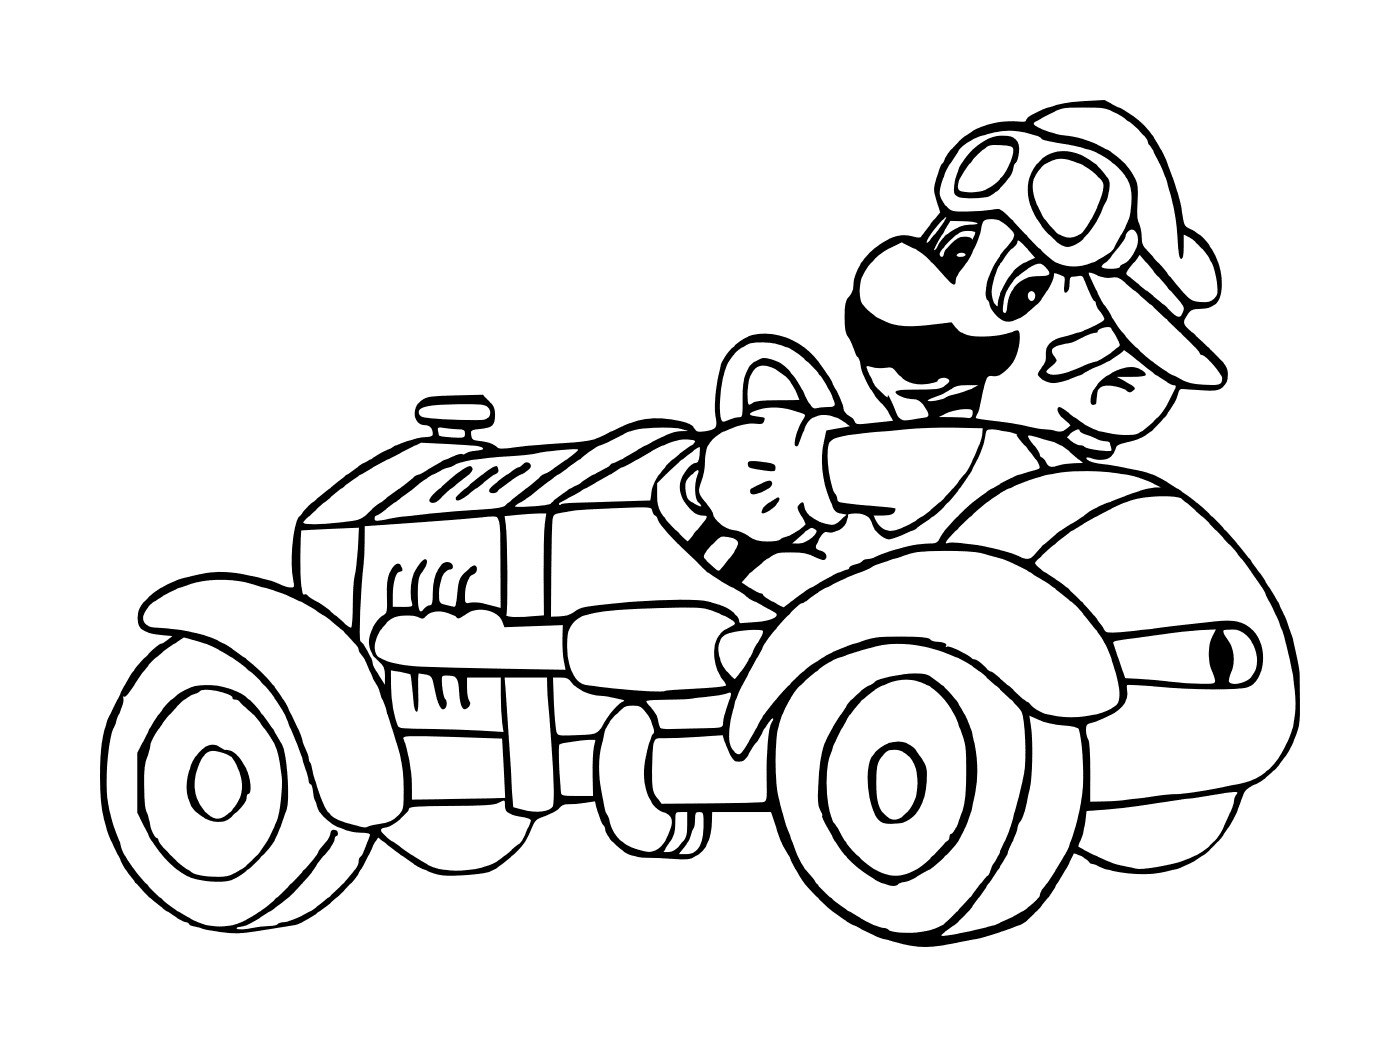  Mario Kart, una vecchia macchina 